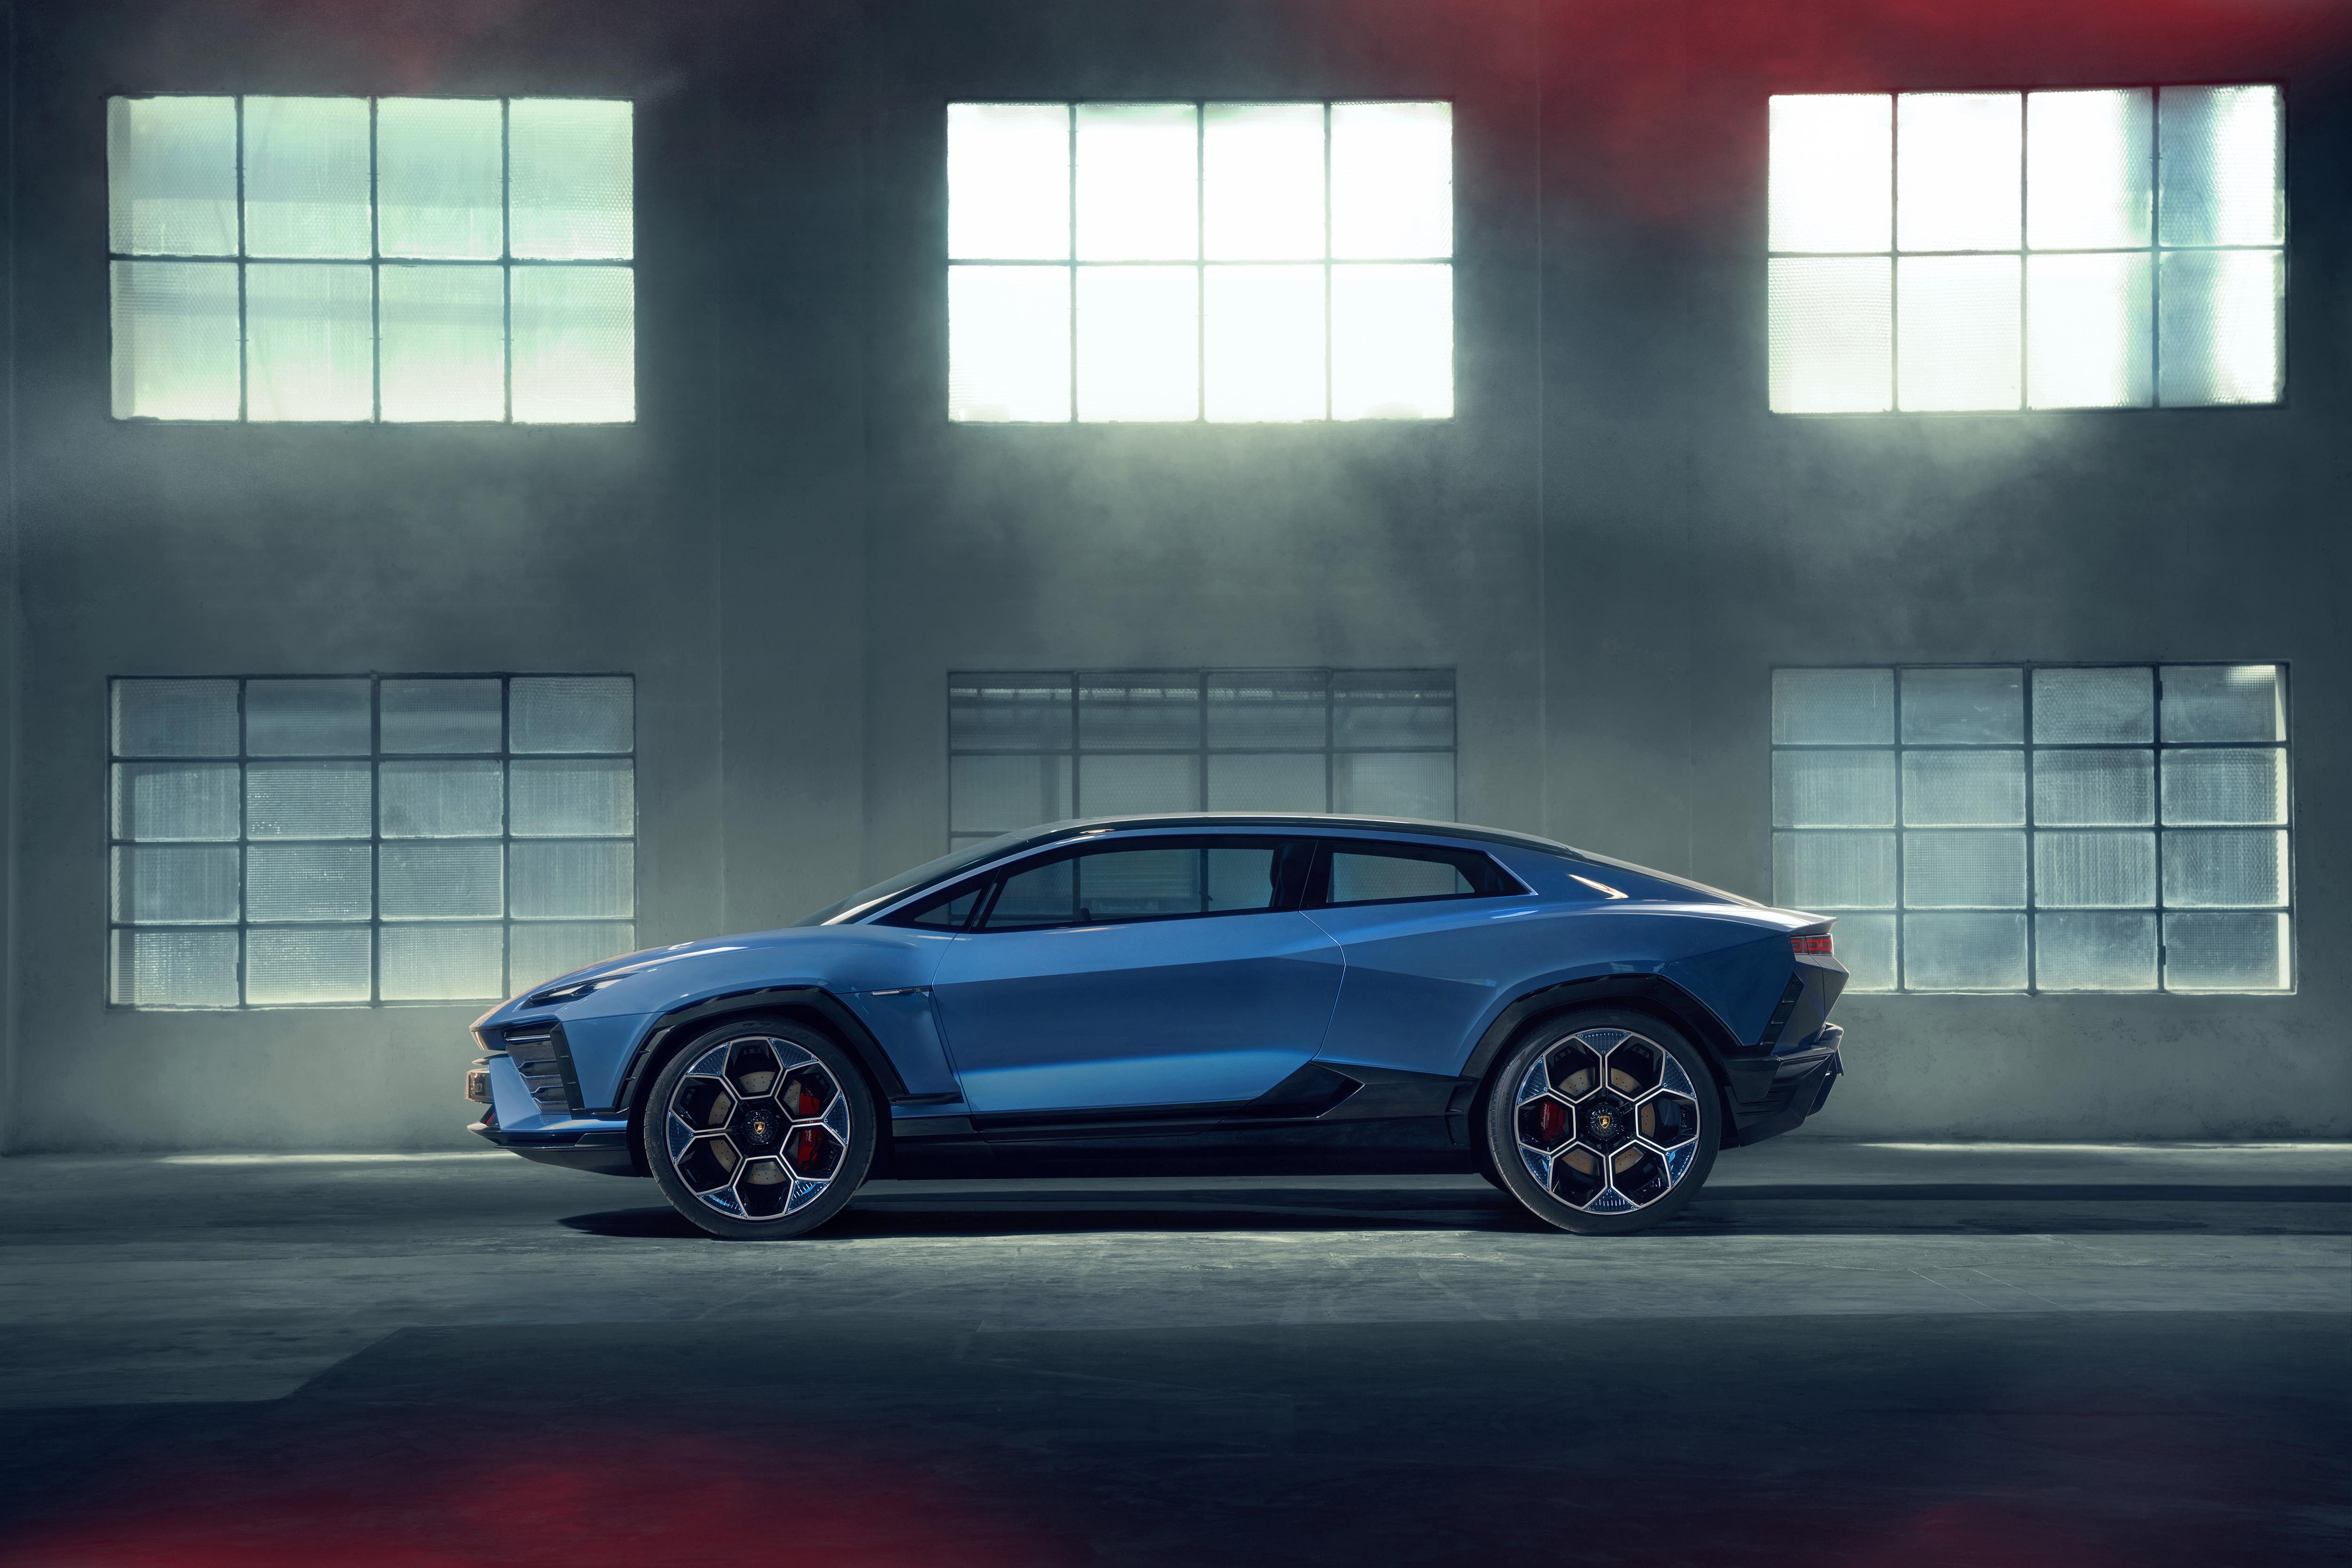 Vehicles Lamborghini Lanzador HD Wallpaper | Background Image